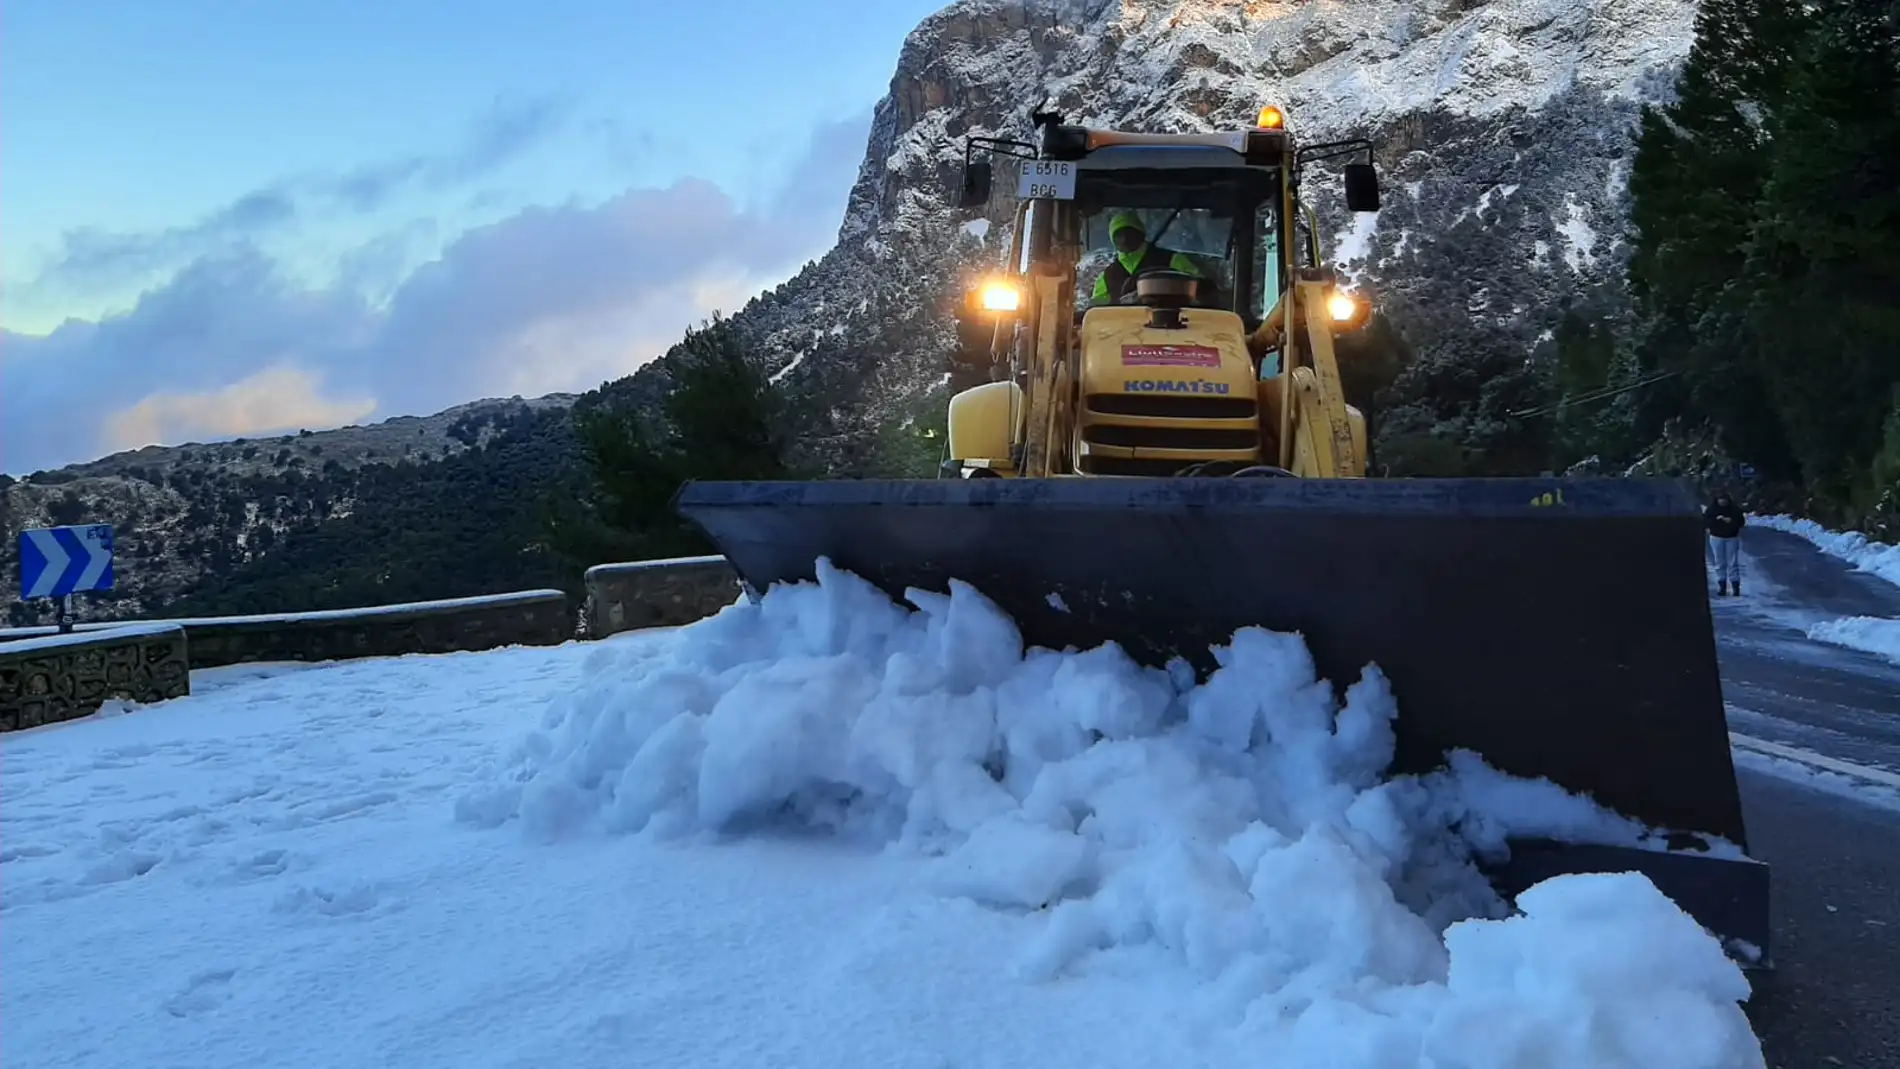 La nieve en la Serra de Tramuntana provoca gran afluencia de coches